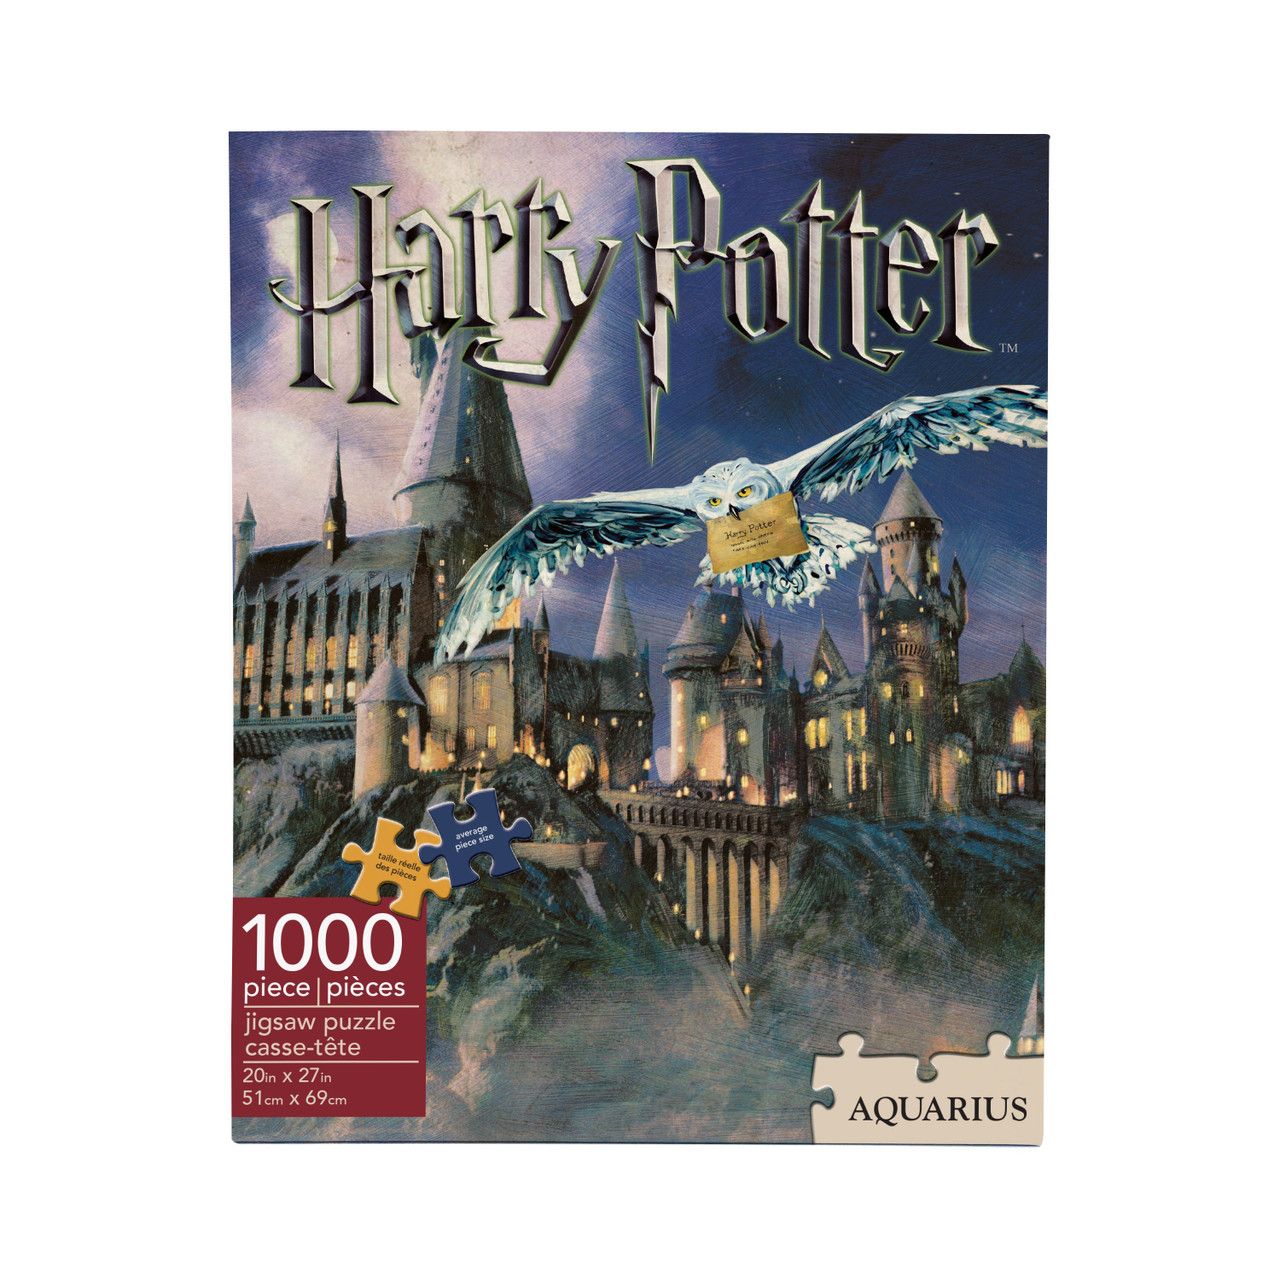 NMR Harry Potter Hogwarts 1000 Piece Puzzle - 